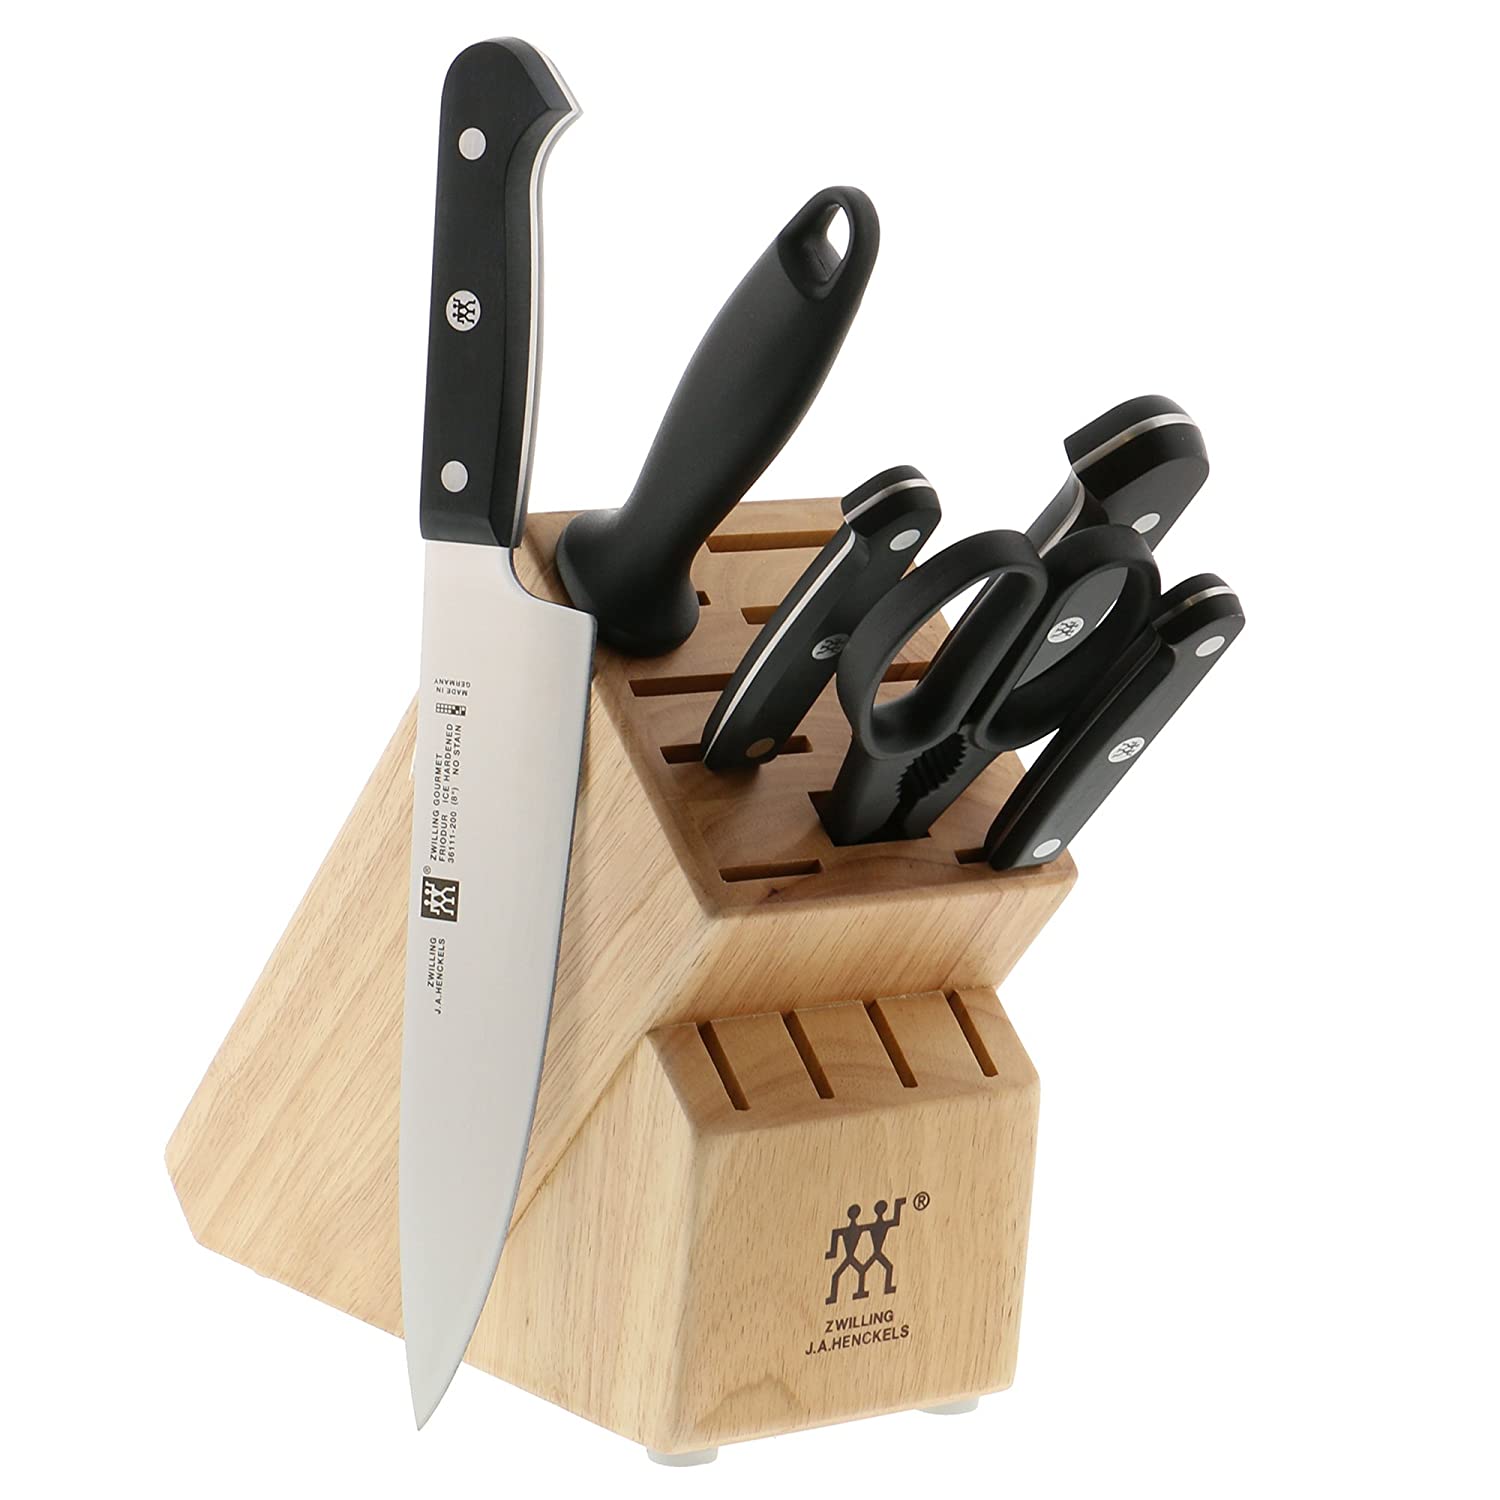 Zwilling knives review: J.A. Henckels Gourmet 7-piece block set